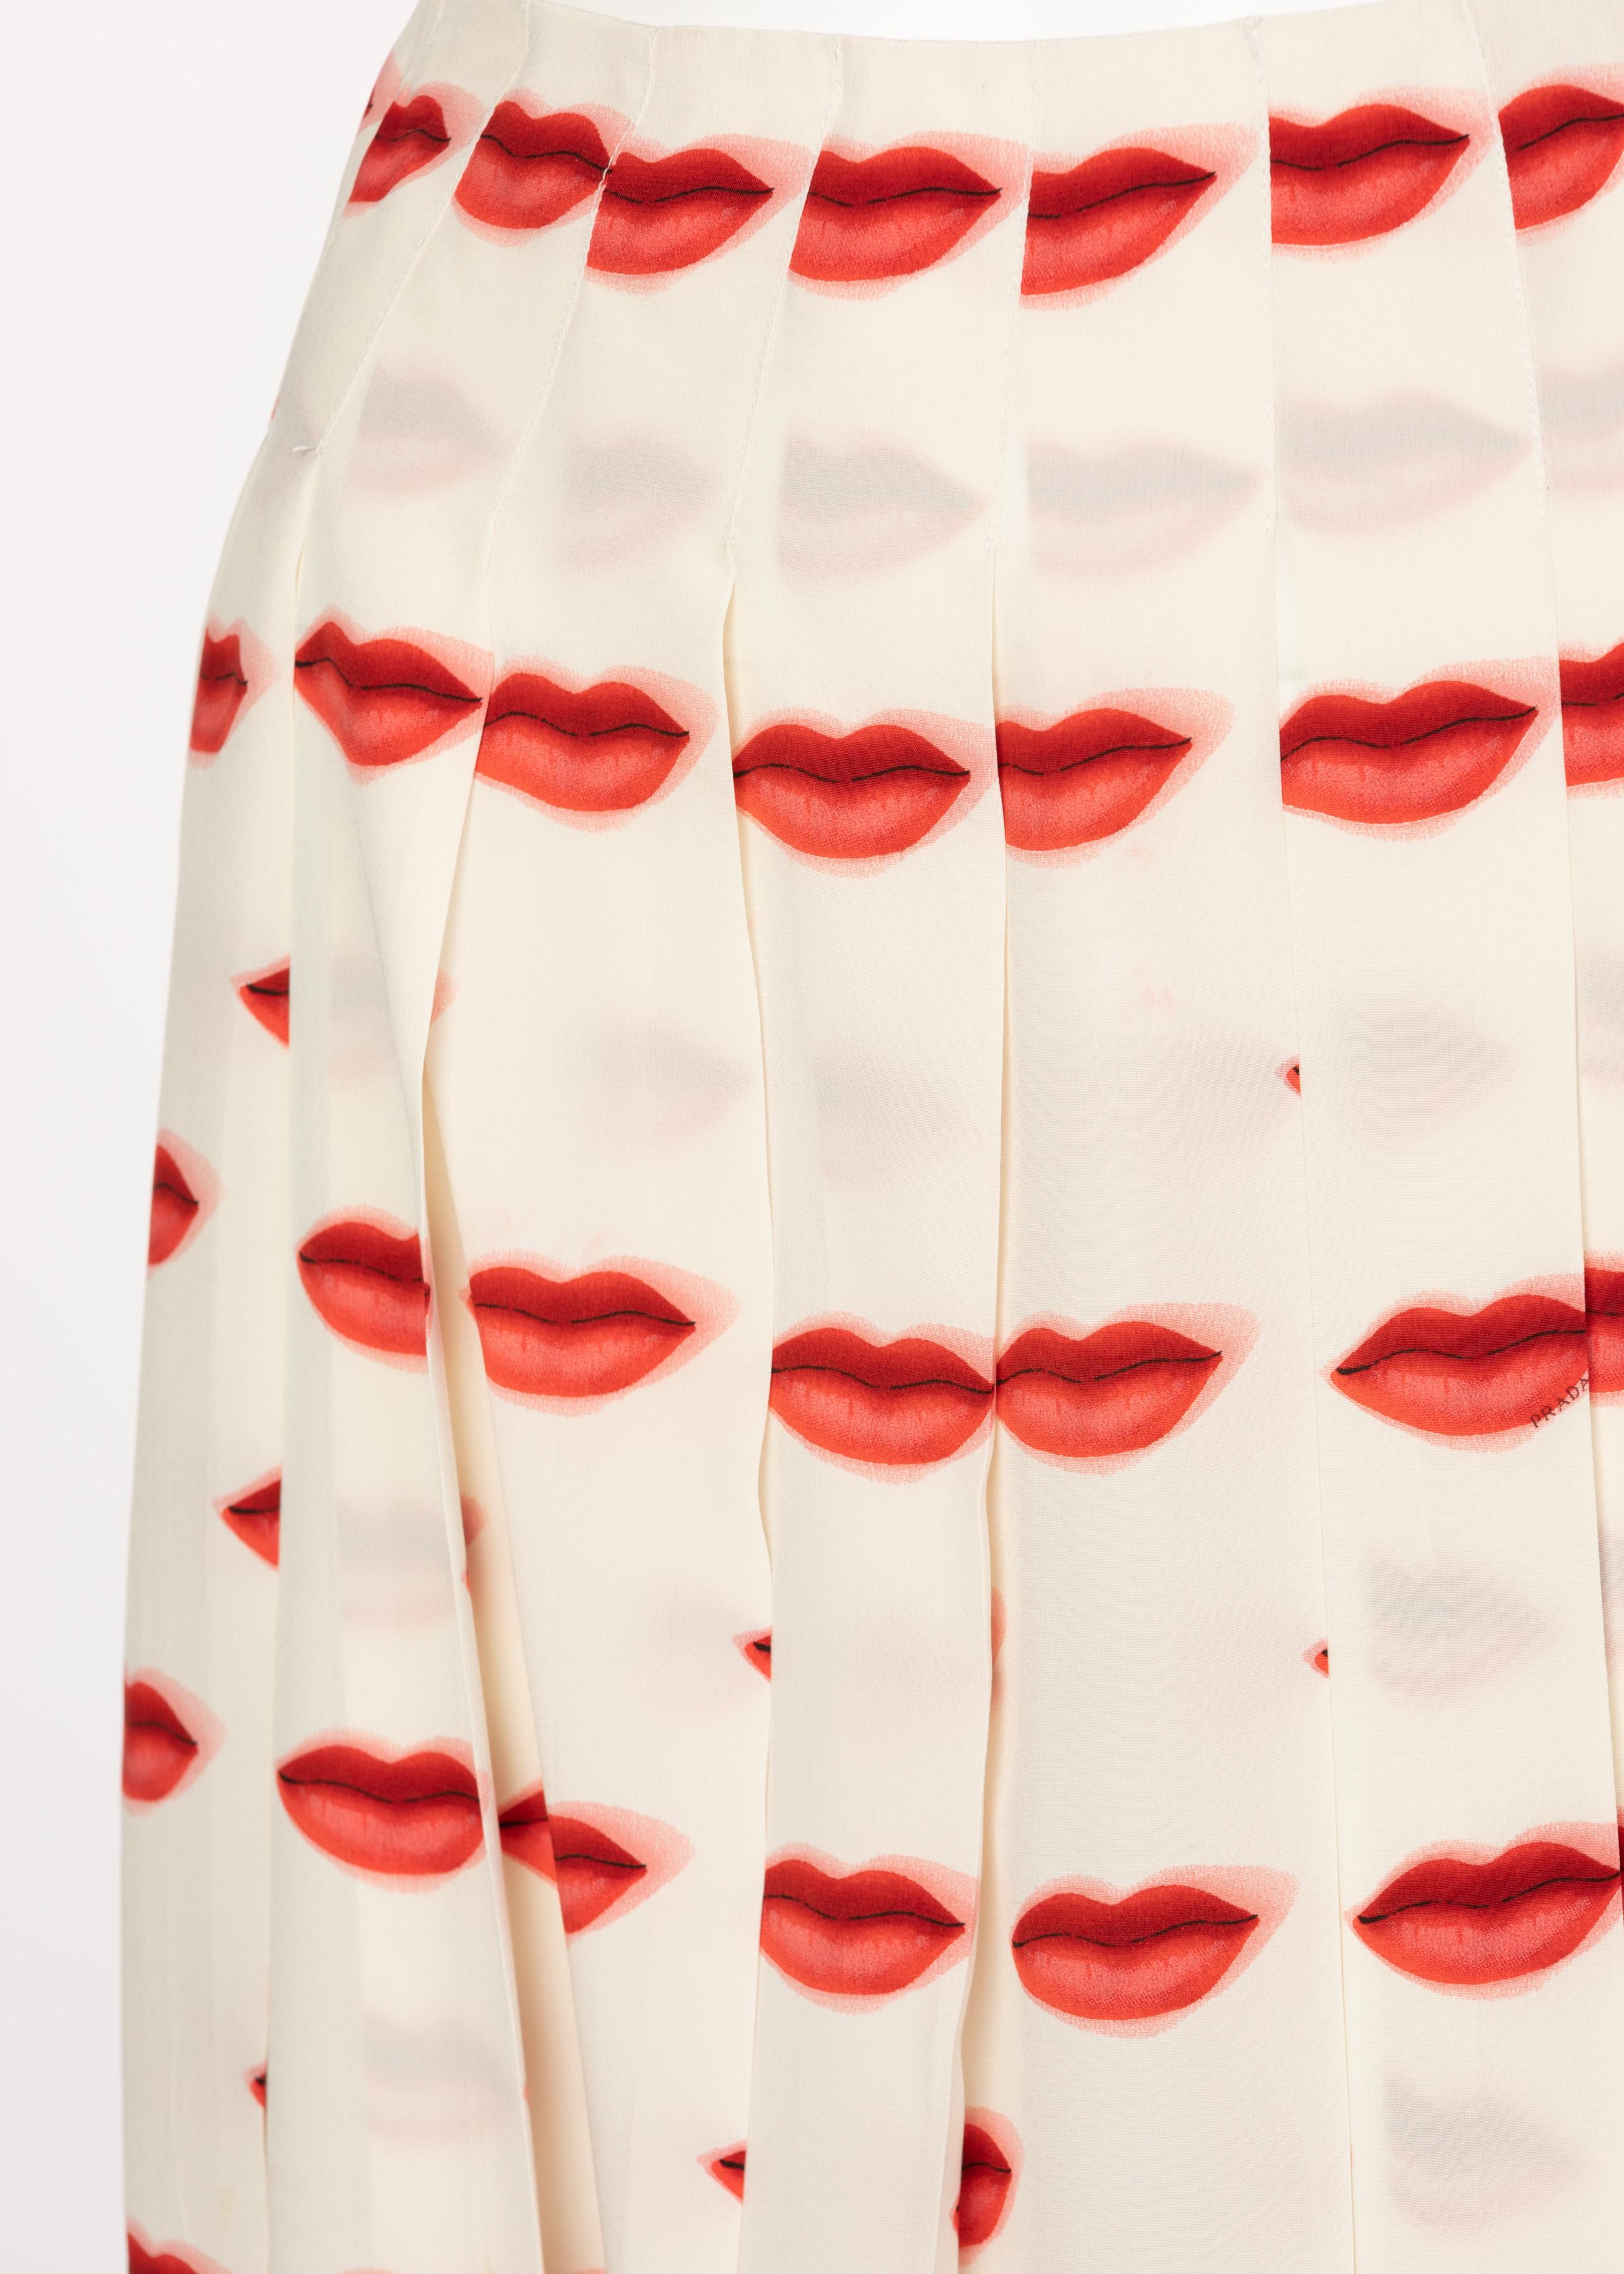 Women's Iconic Prada Red Lip Print Pleated Skirt, Spring 2000